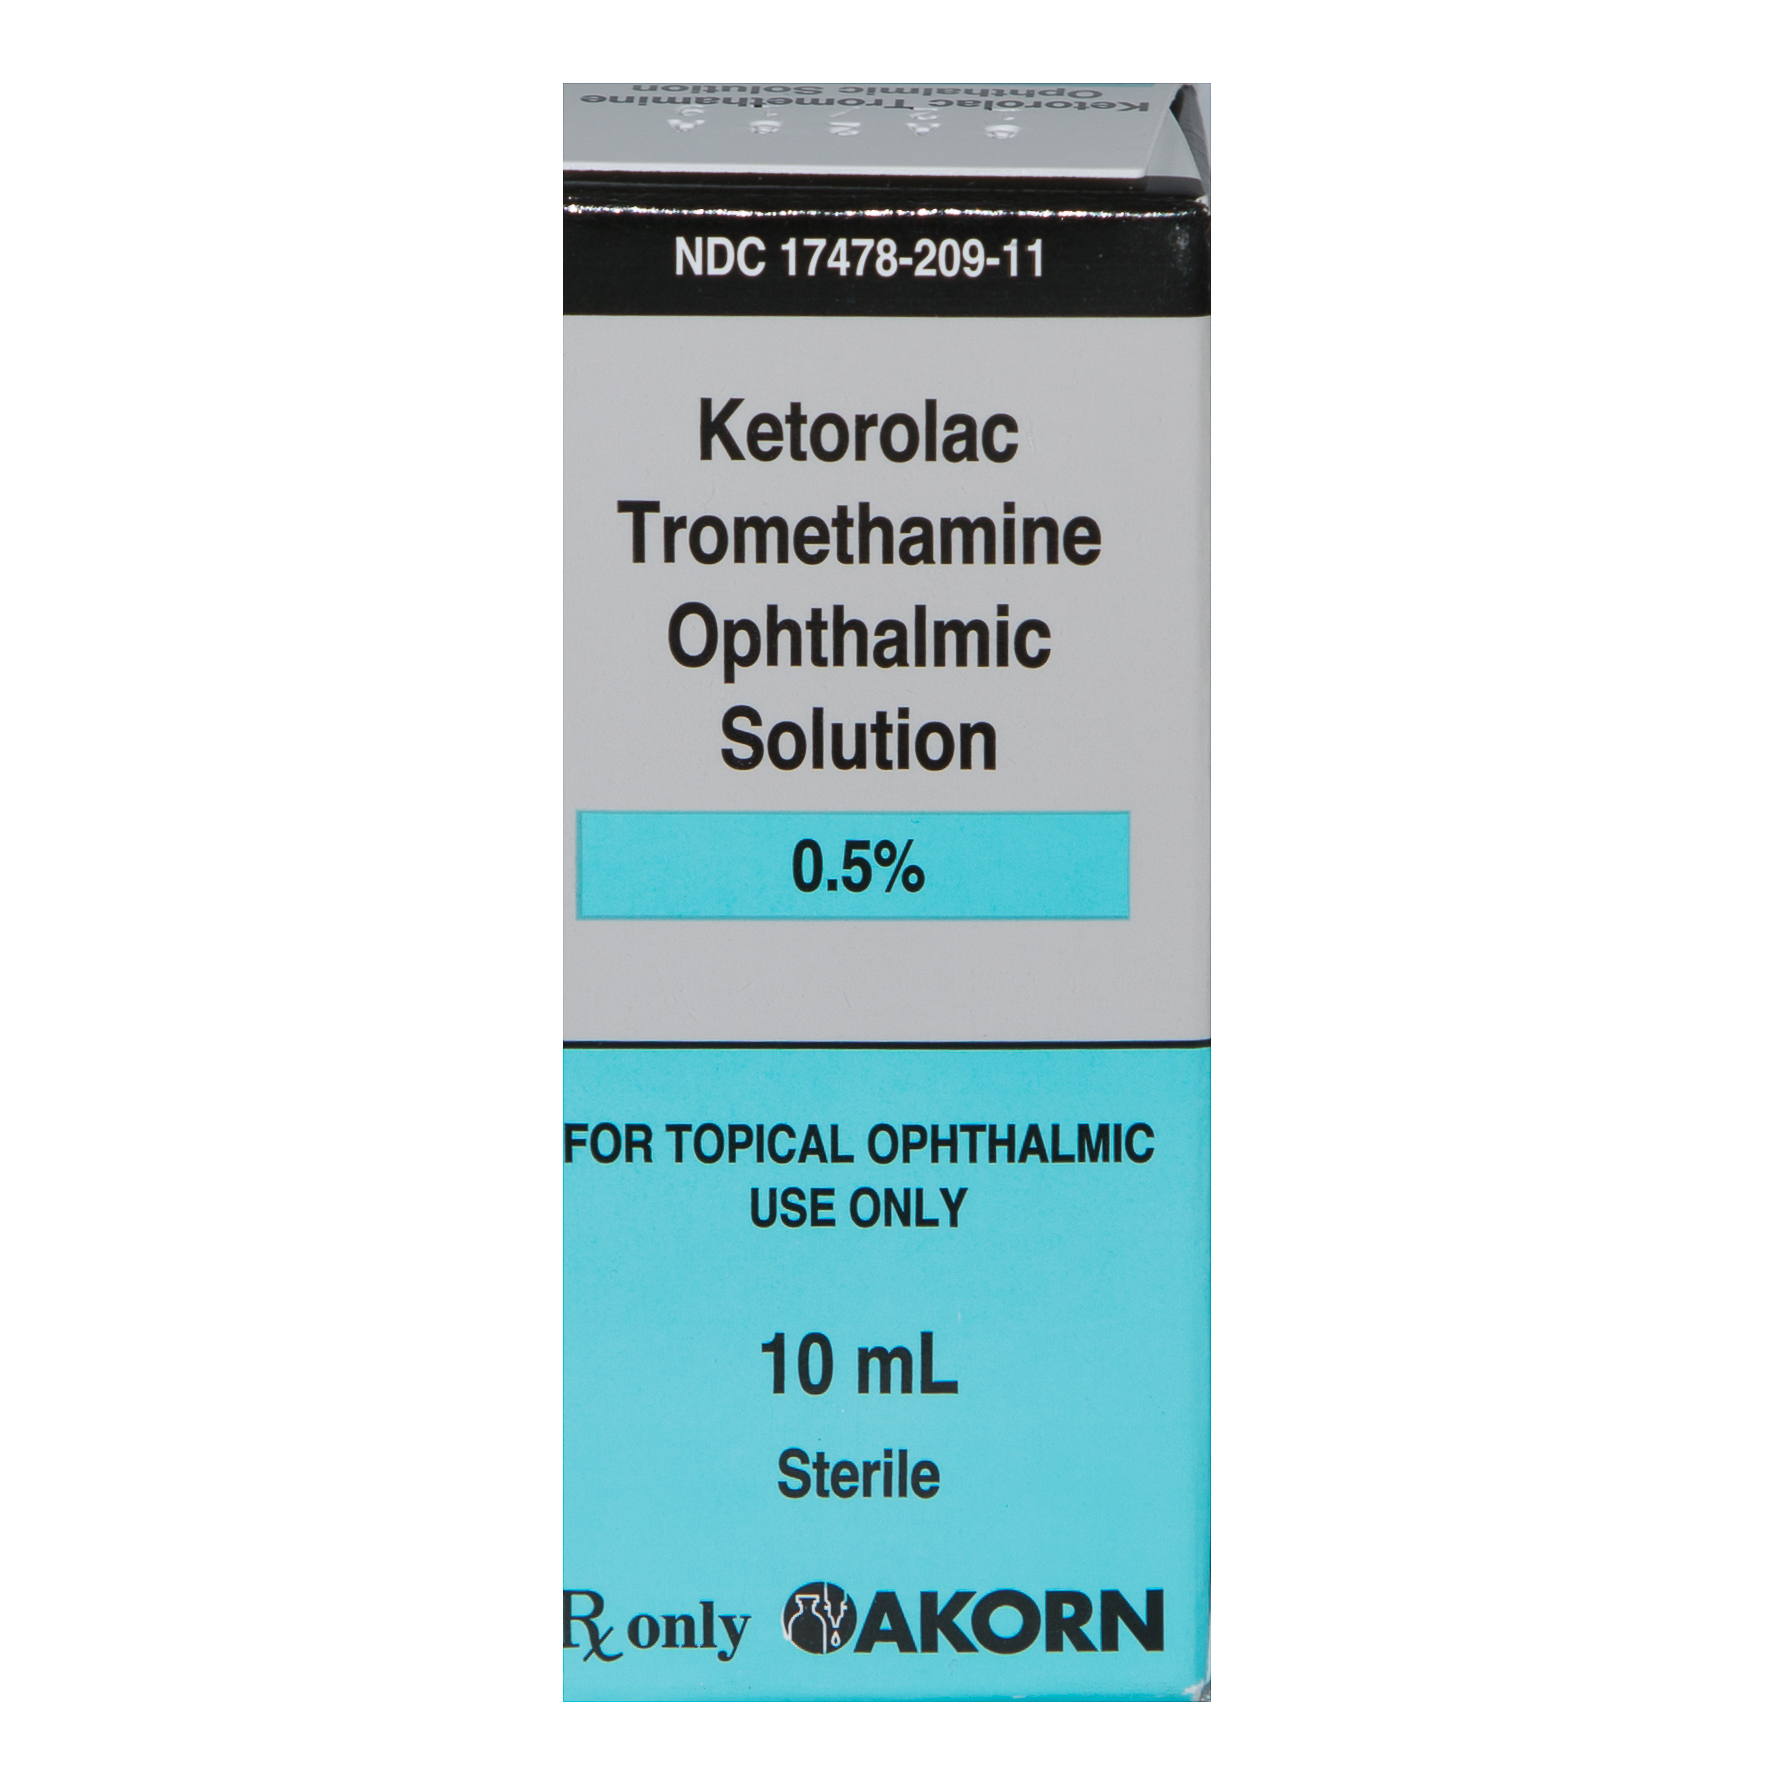 ketorolac tromethamine